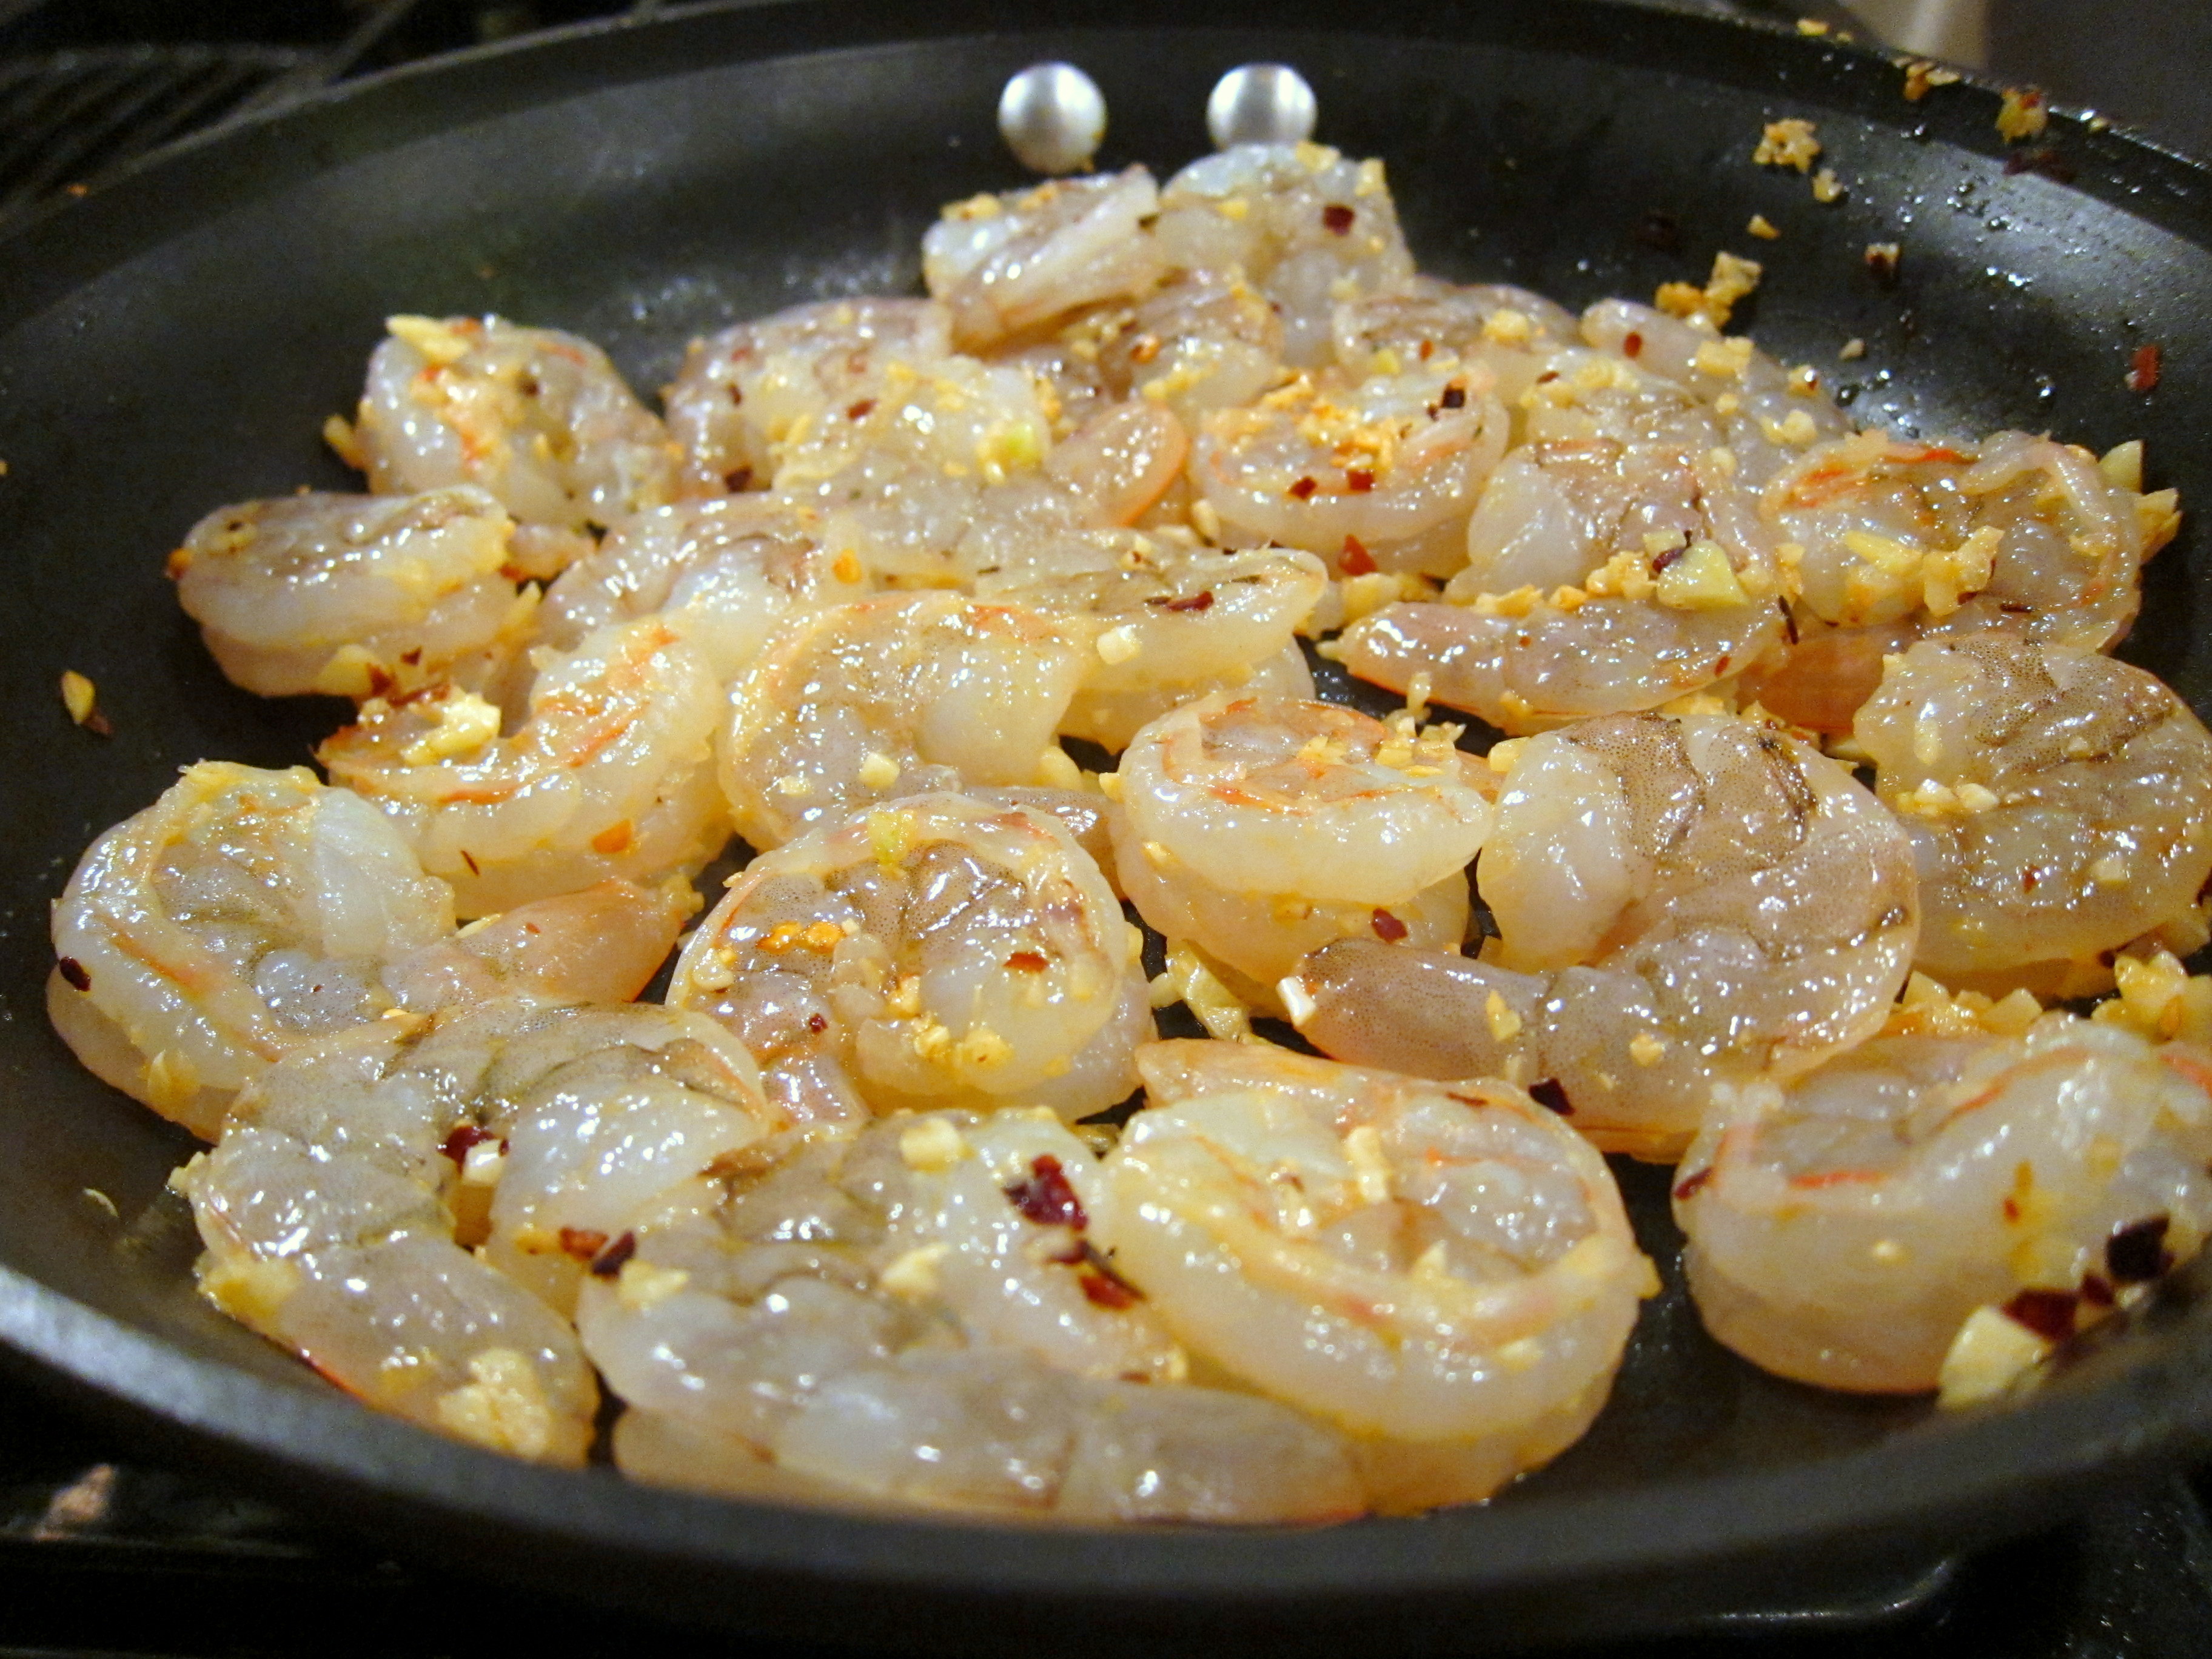 Free photo: Cooking shrimp - Basil, Cook, Cooking - Free Download - Jooinn